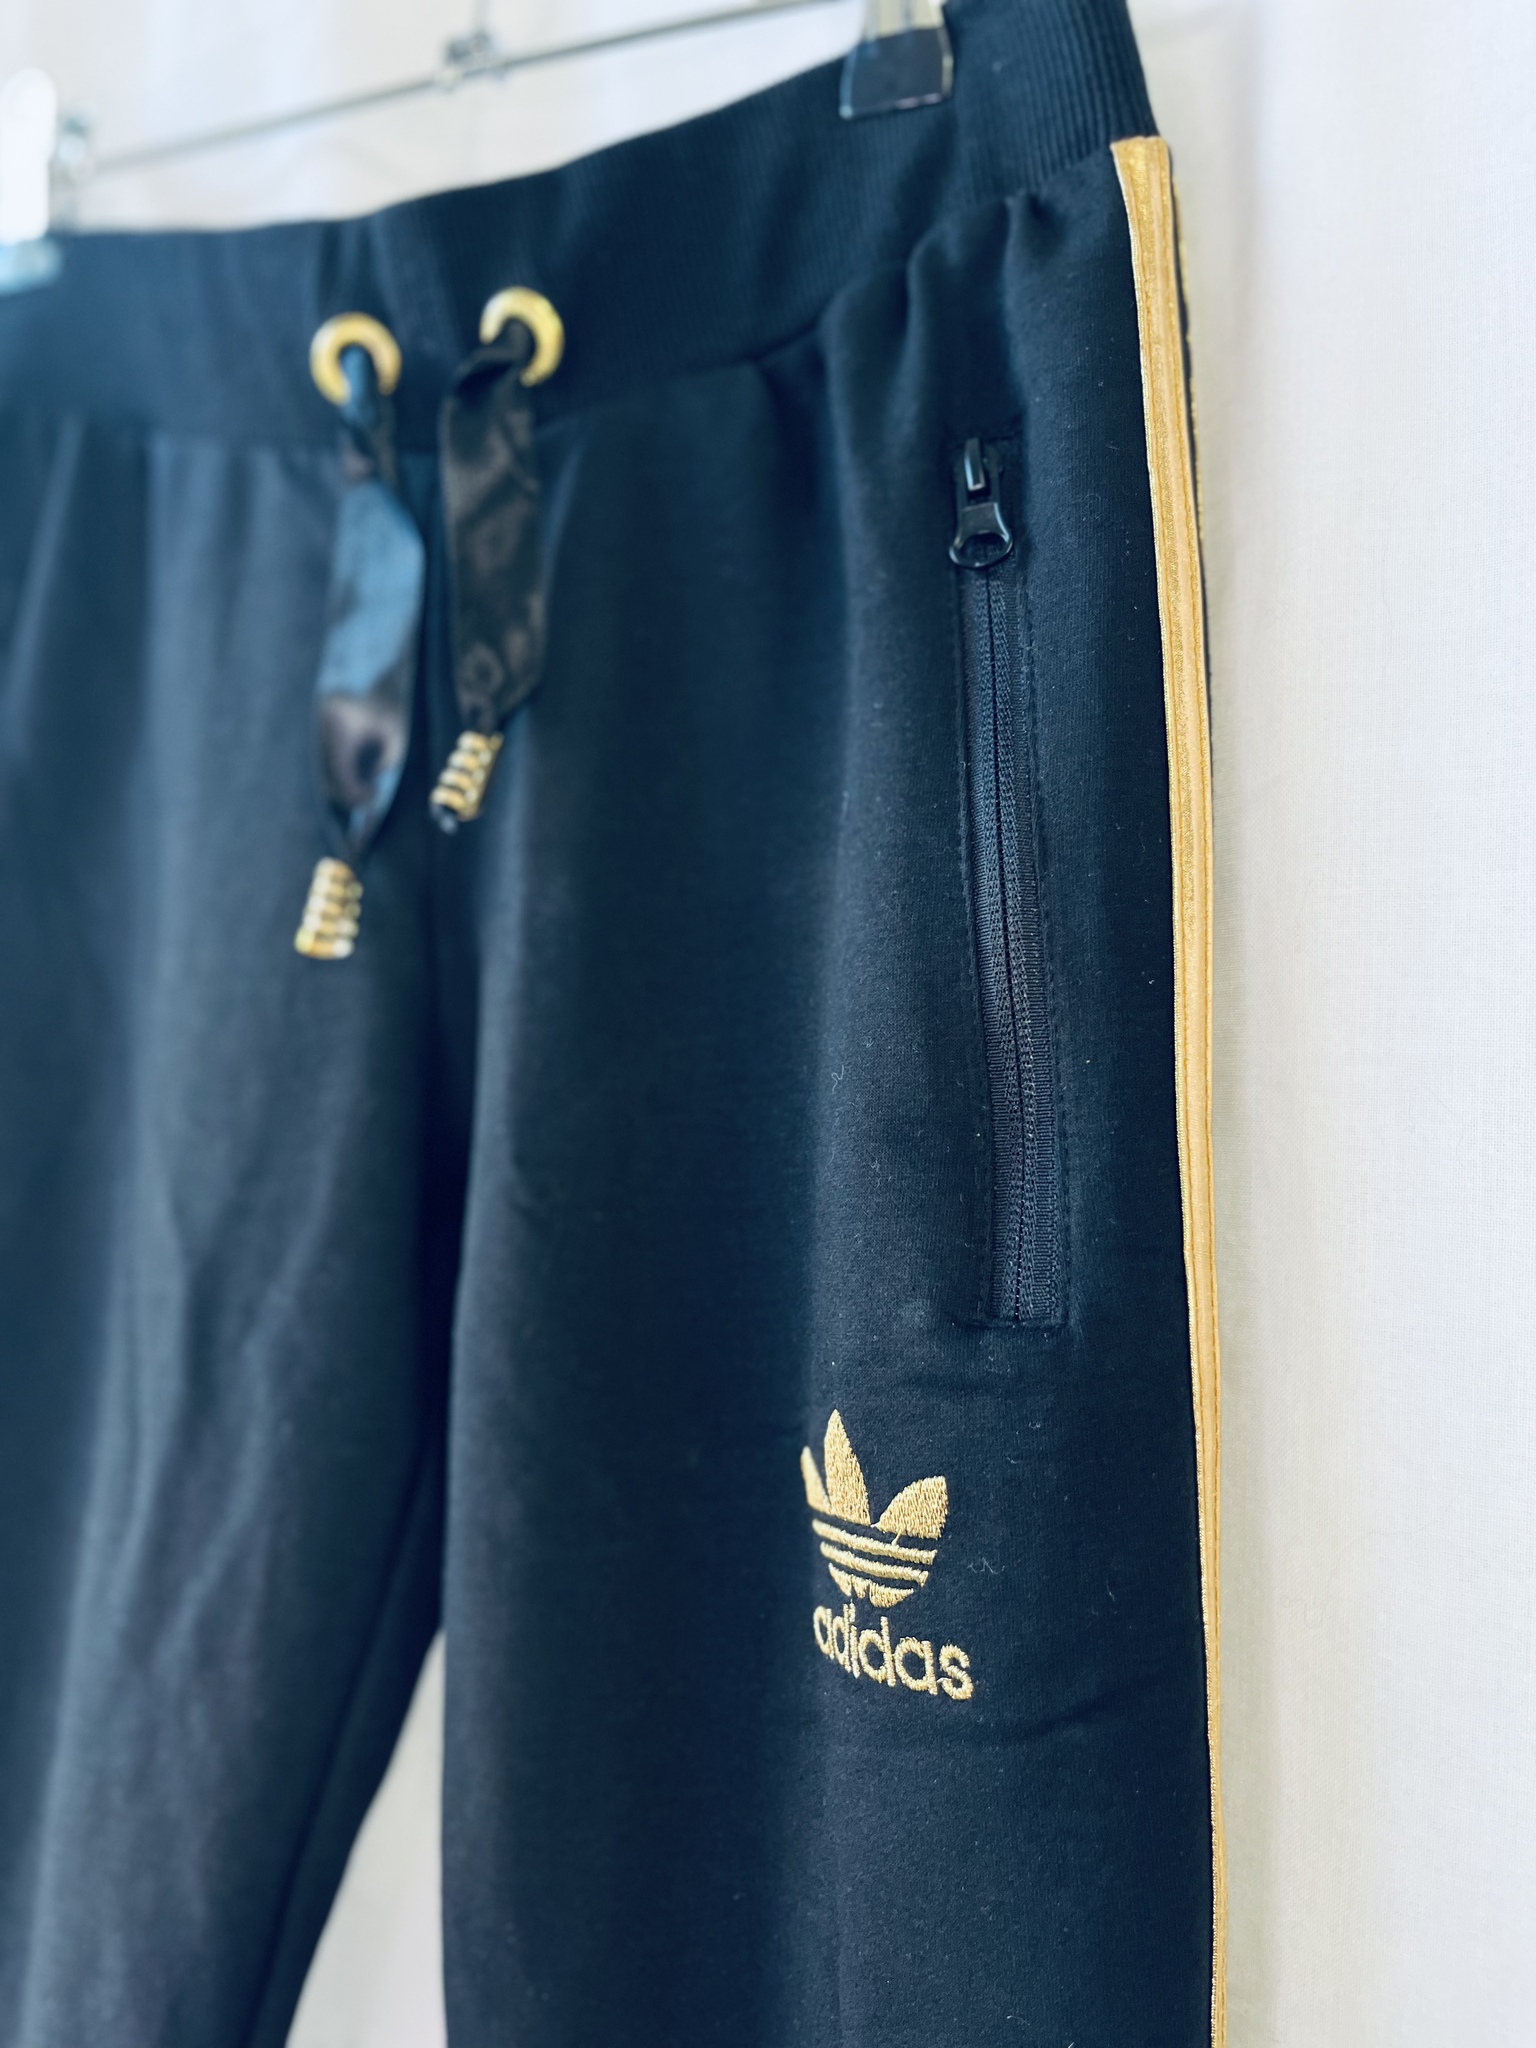 Adidas - set i svart och guld NWT